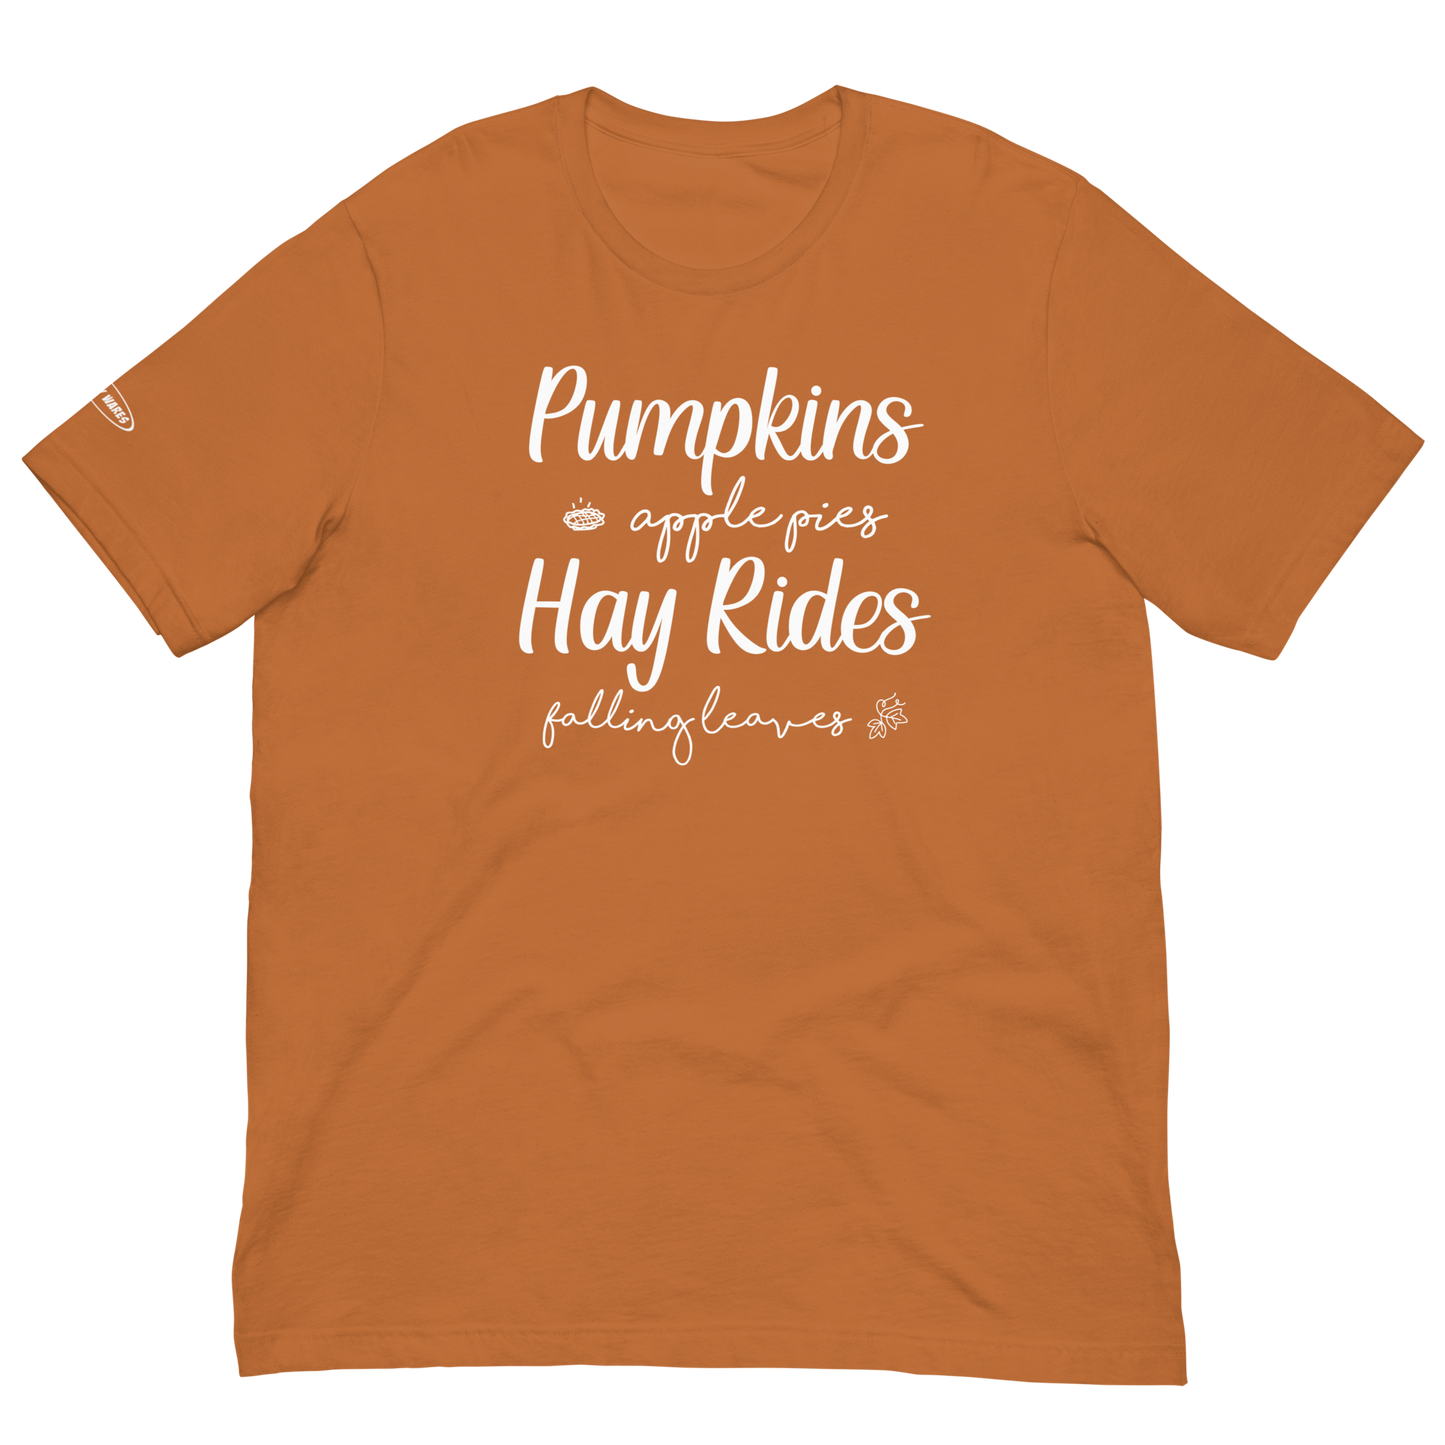 Unisex - Fall Pumpkins, Apple Pies, Hay Rides, Falling Leaves - Fun T-shirt